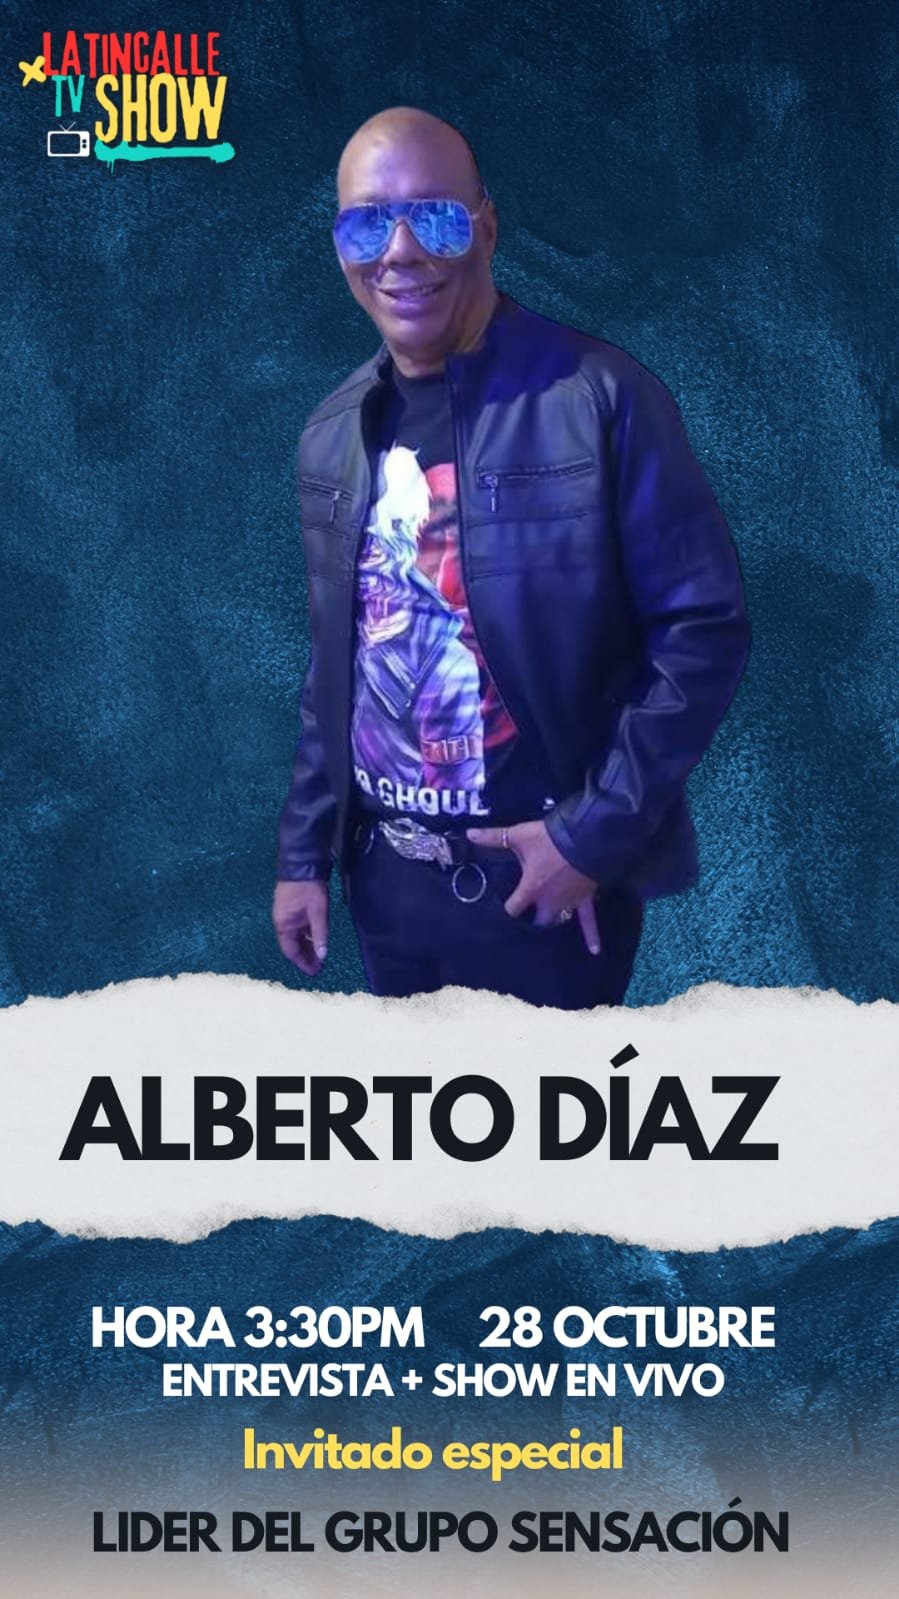 Alberto Diaz de Gira Promocional por Colombia